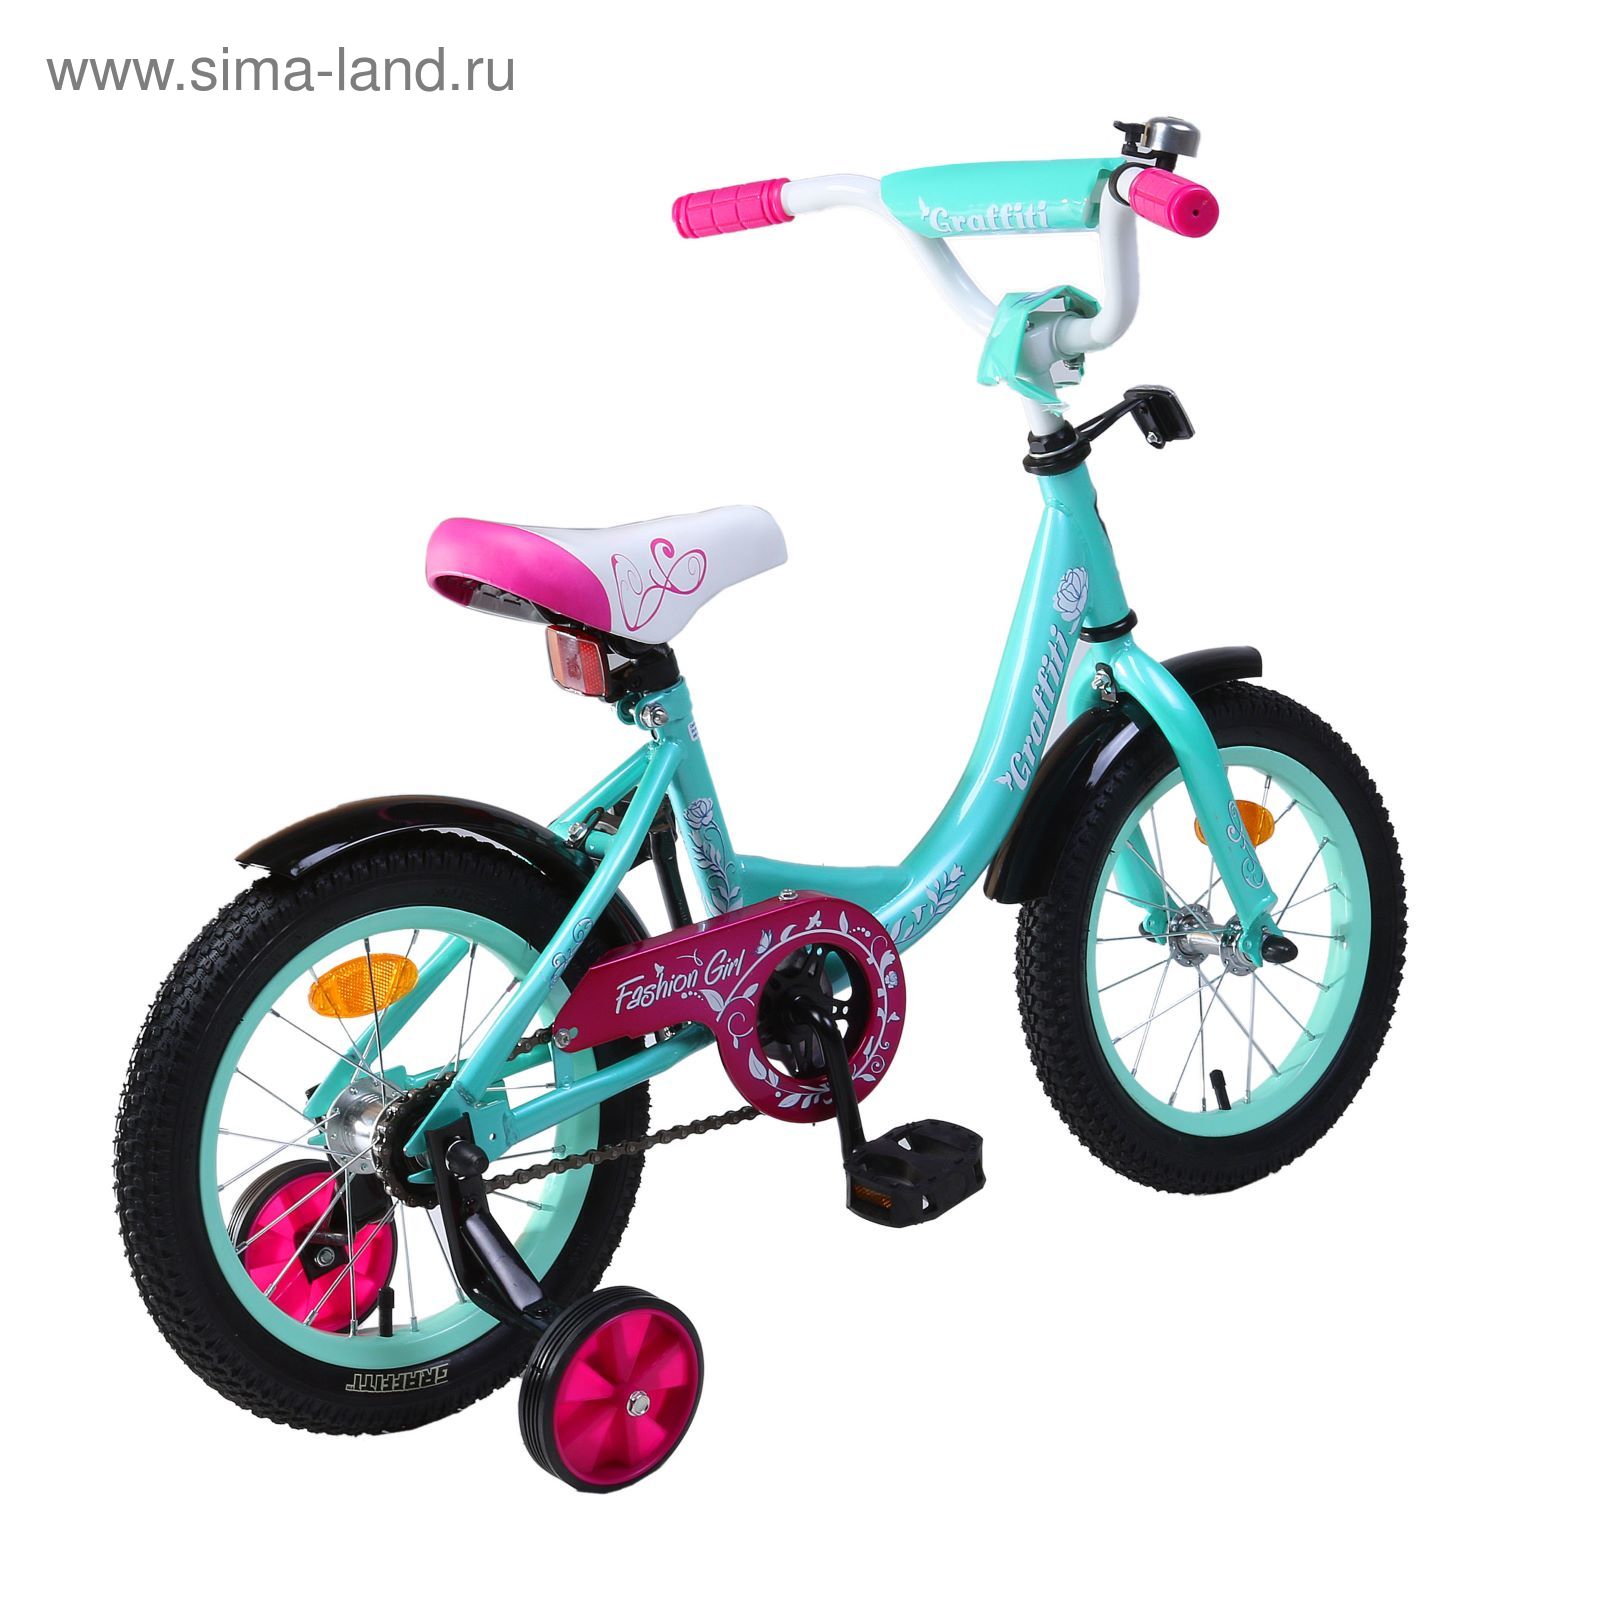 Велосипед 14" GRAFFITI Fashion Girl RUS, 2017, цвет бирюзовый